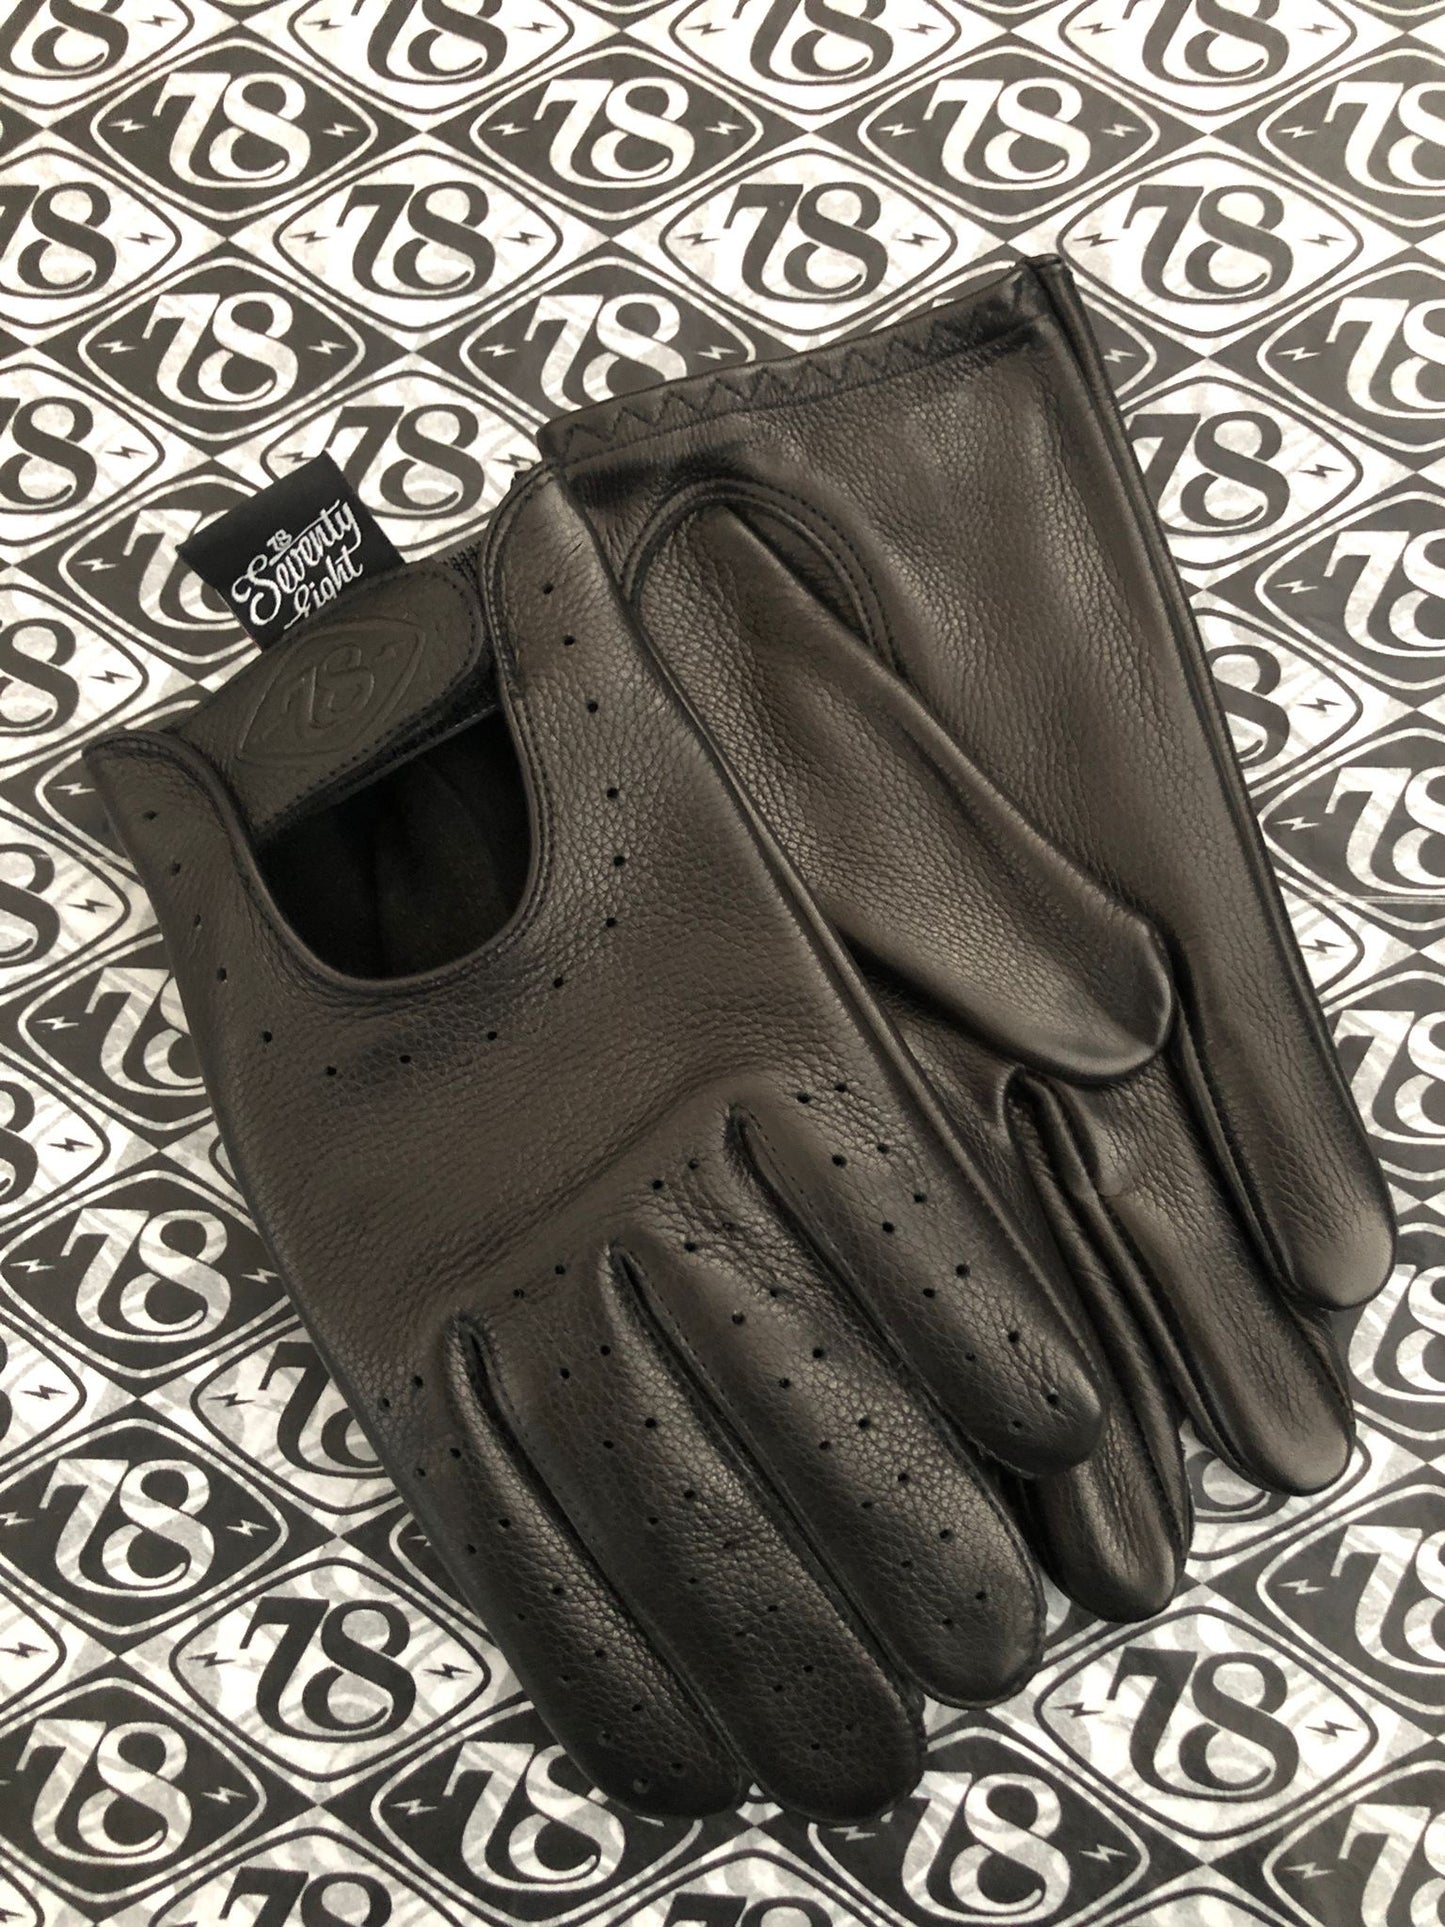 78 Motor Co Superlusso Gloves - Black